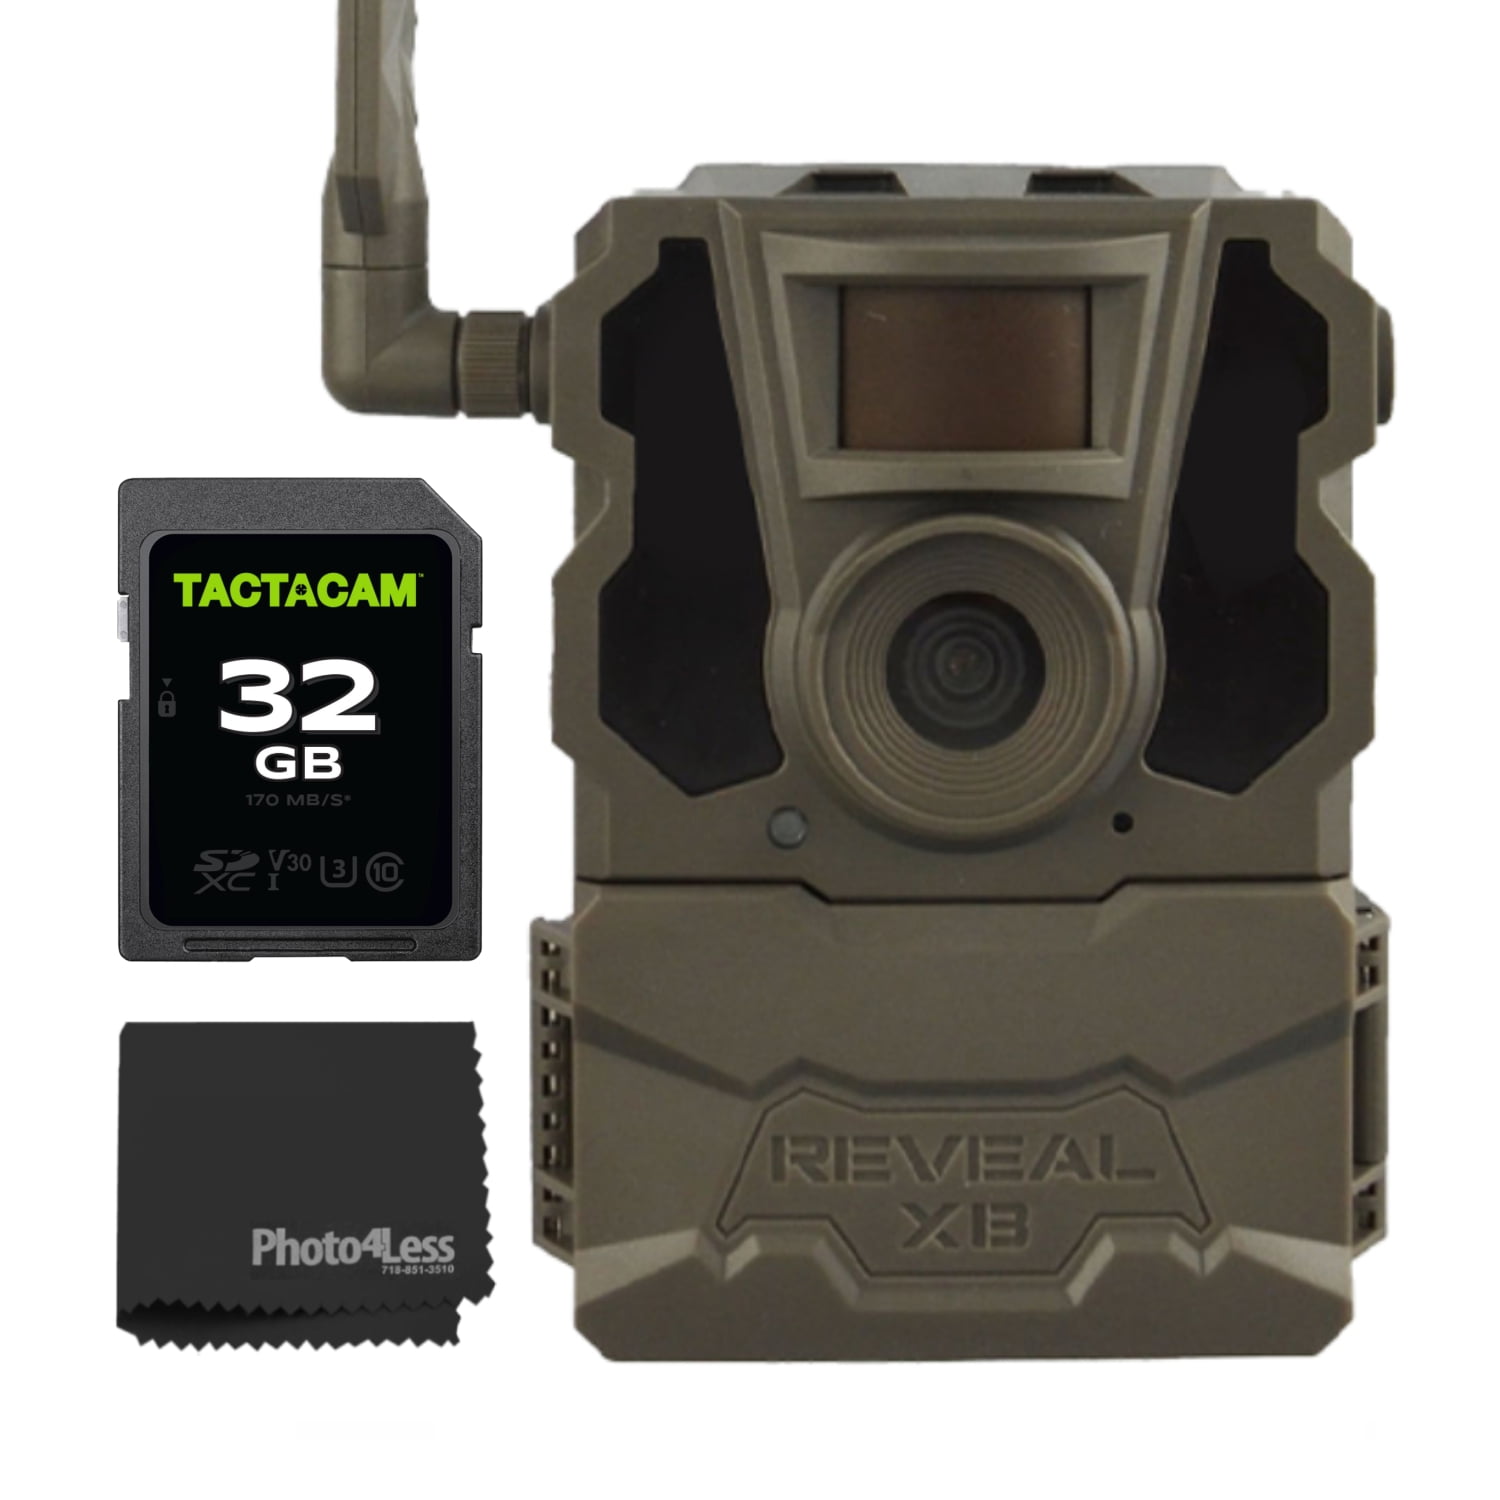 Brand New Unopened Tactacam Reveal VERIZON Cellular Trail Camera SHIPS SAME DAY 